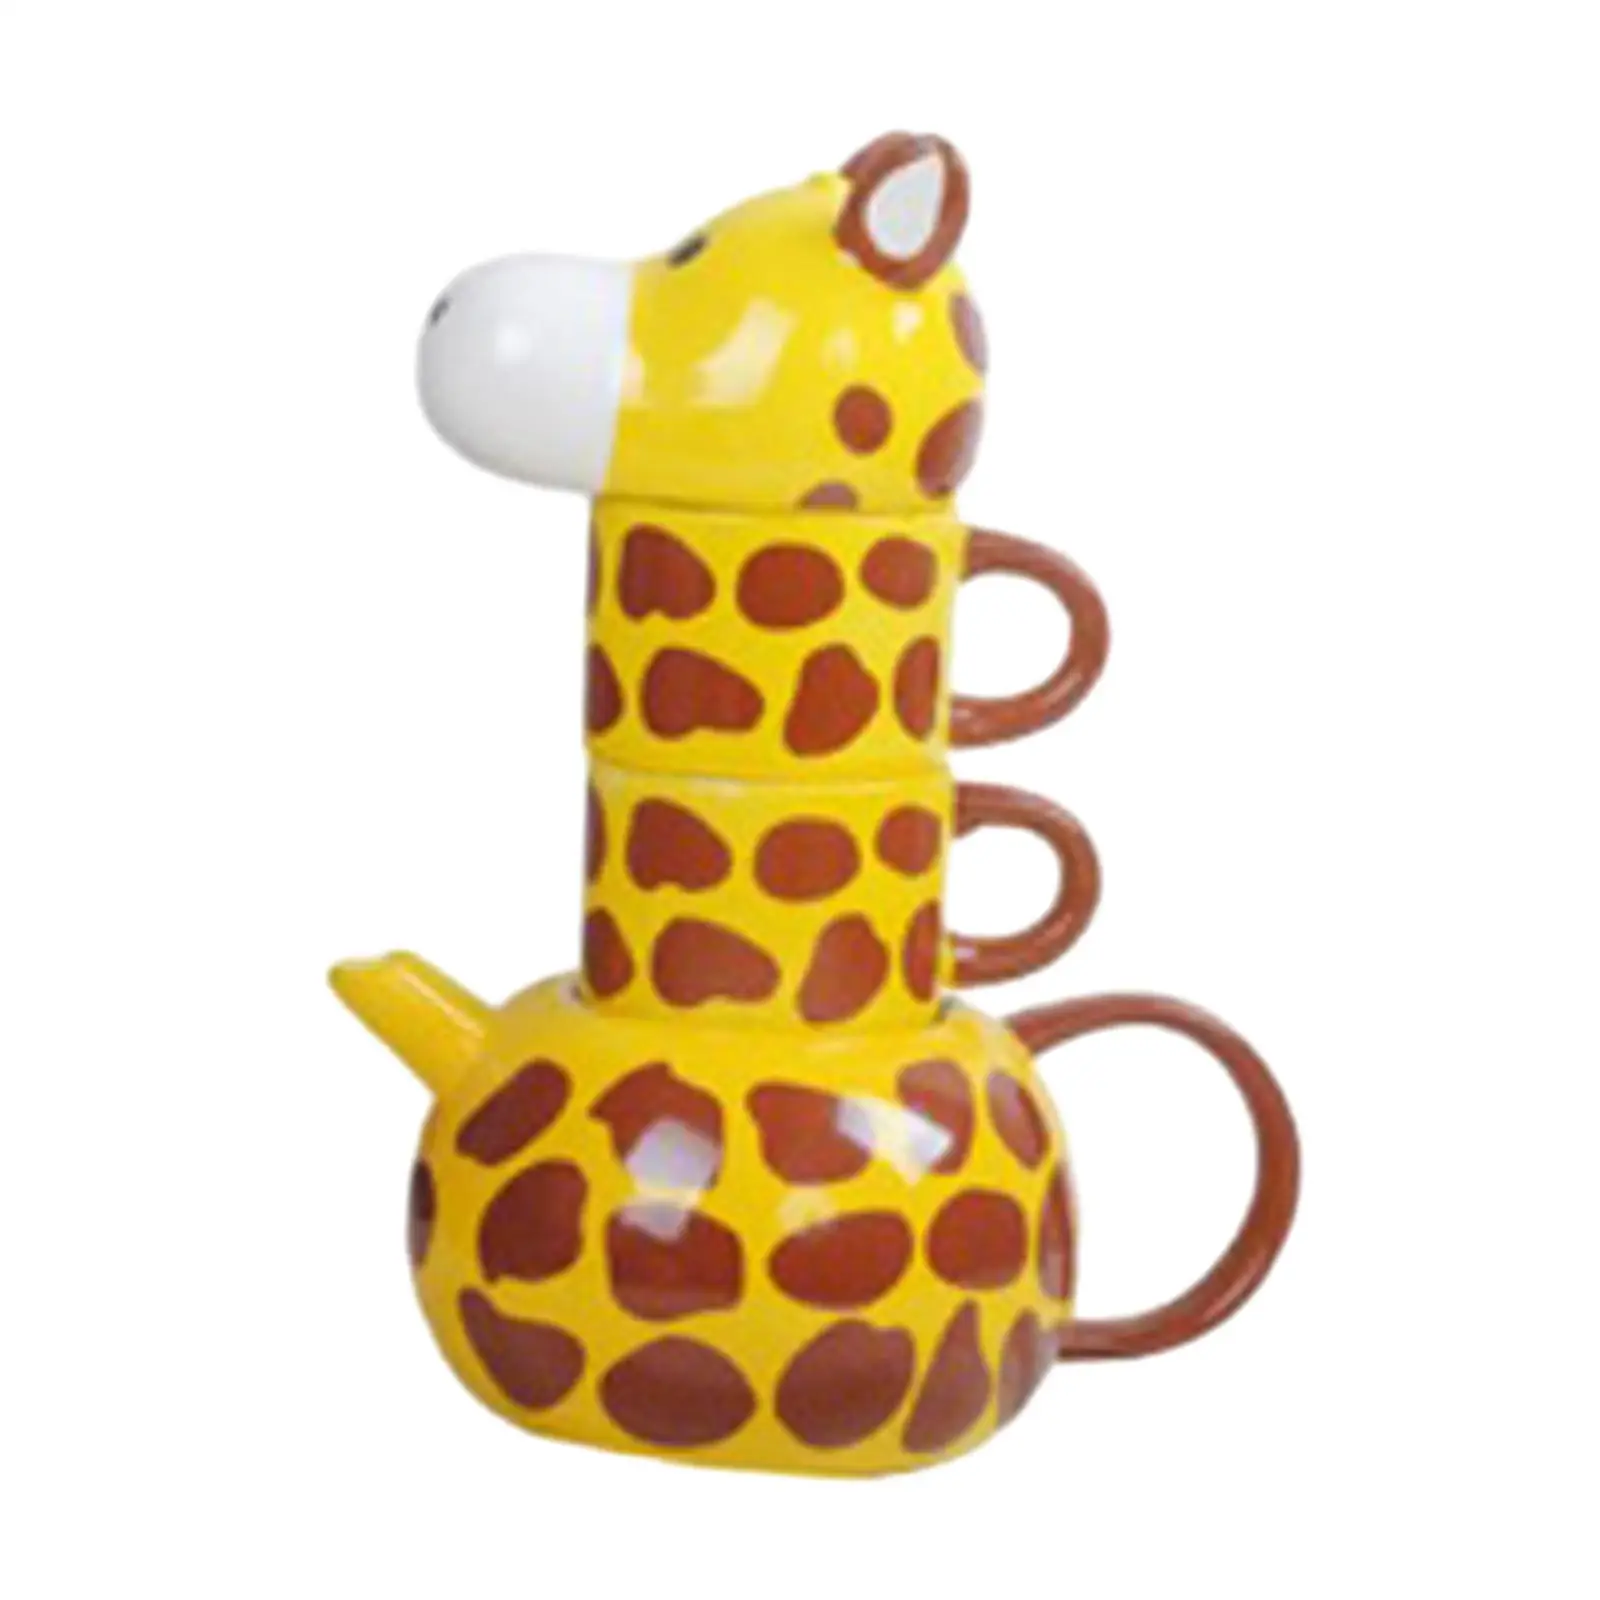 Giraffe Teapot Set with 2 Cups Porcelain for Boys Girls Milk Mug Cup Gifts Tea Mugs Tea Set Coffee Mug for Table Office Travel